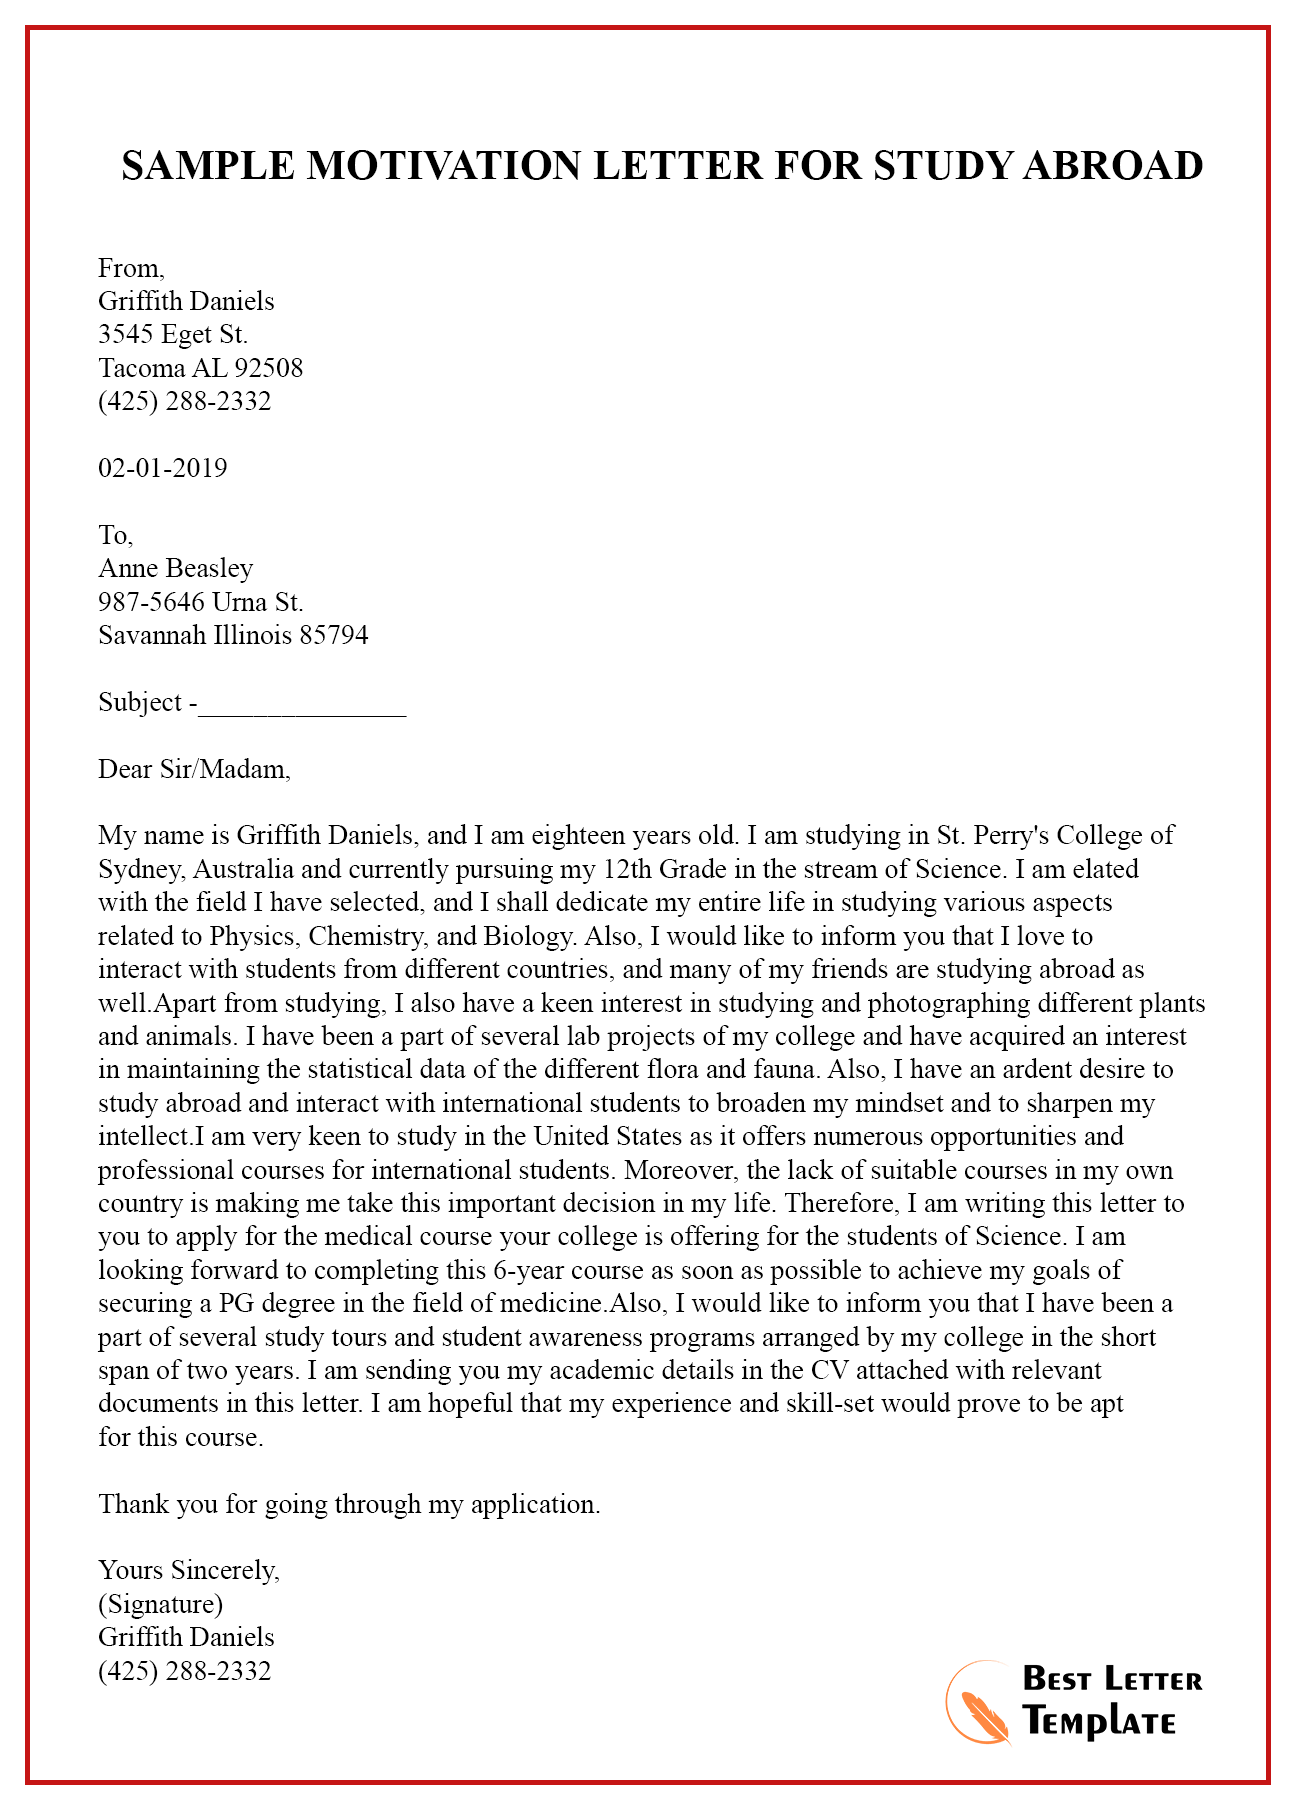 motivation-letter-pdf-riset